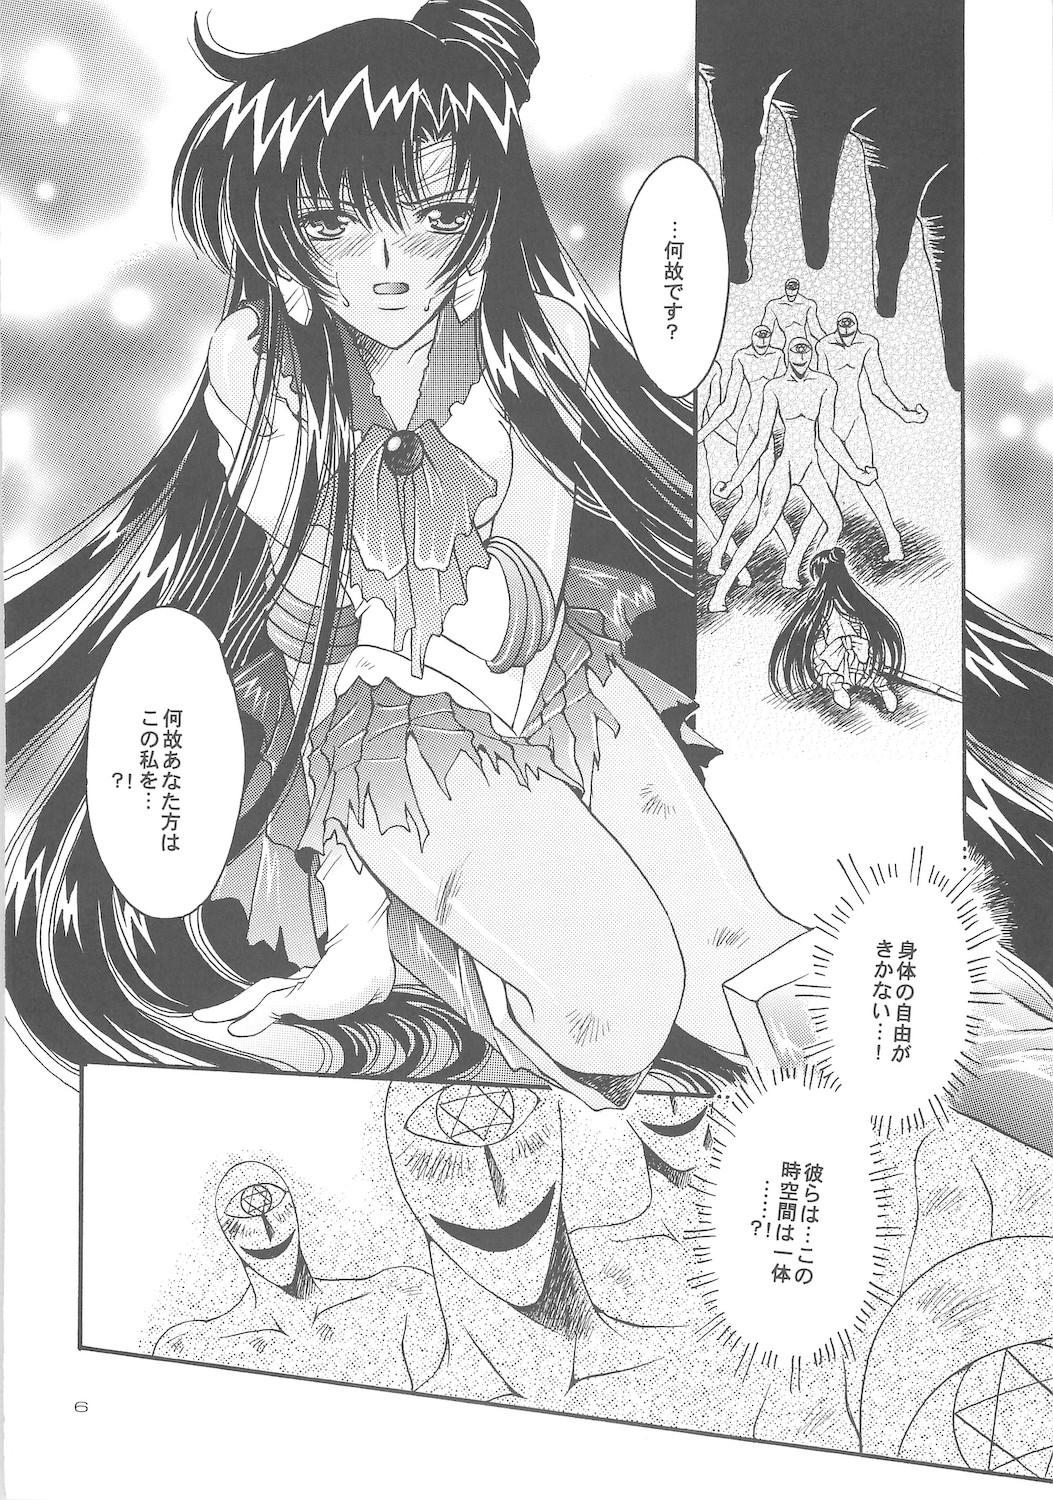 Tiny Tits Owaru Sekai dai 4 shou - Sailor moon Girl Gets Fucked - Page 6